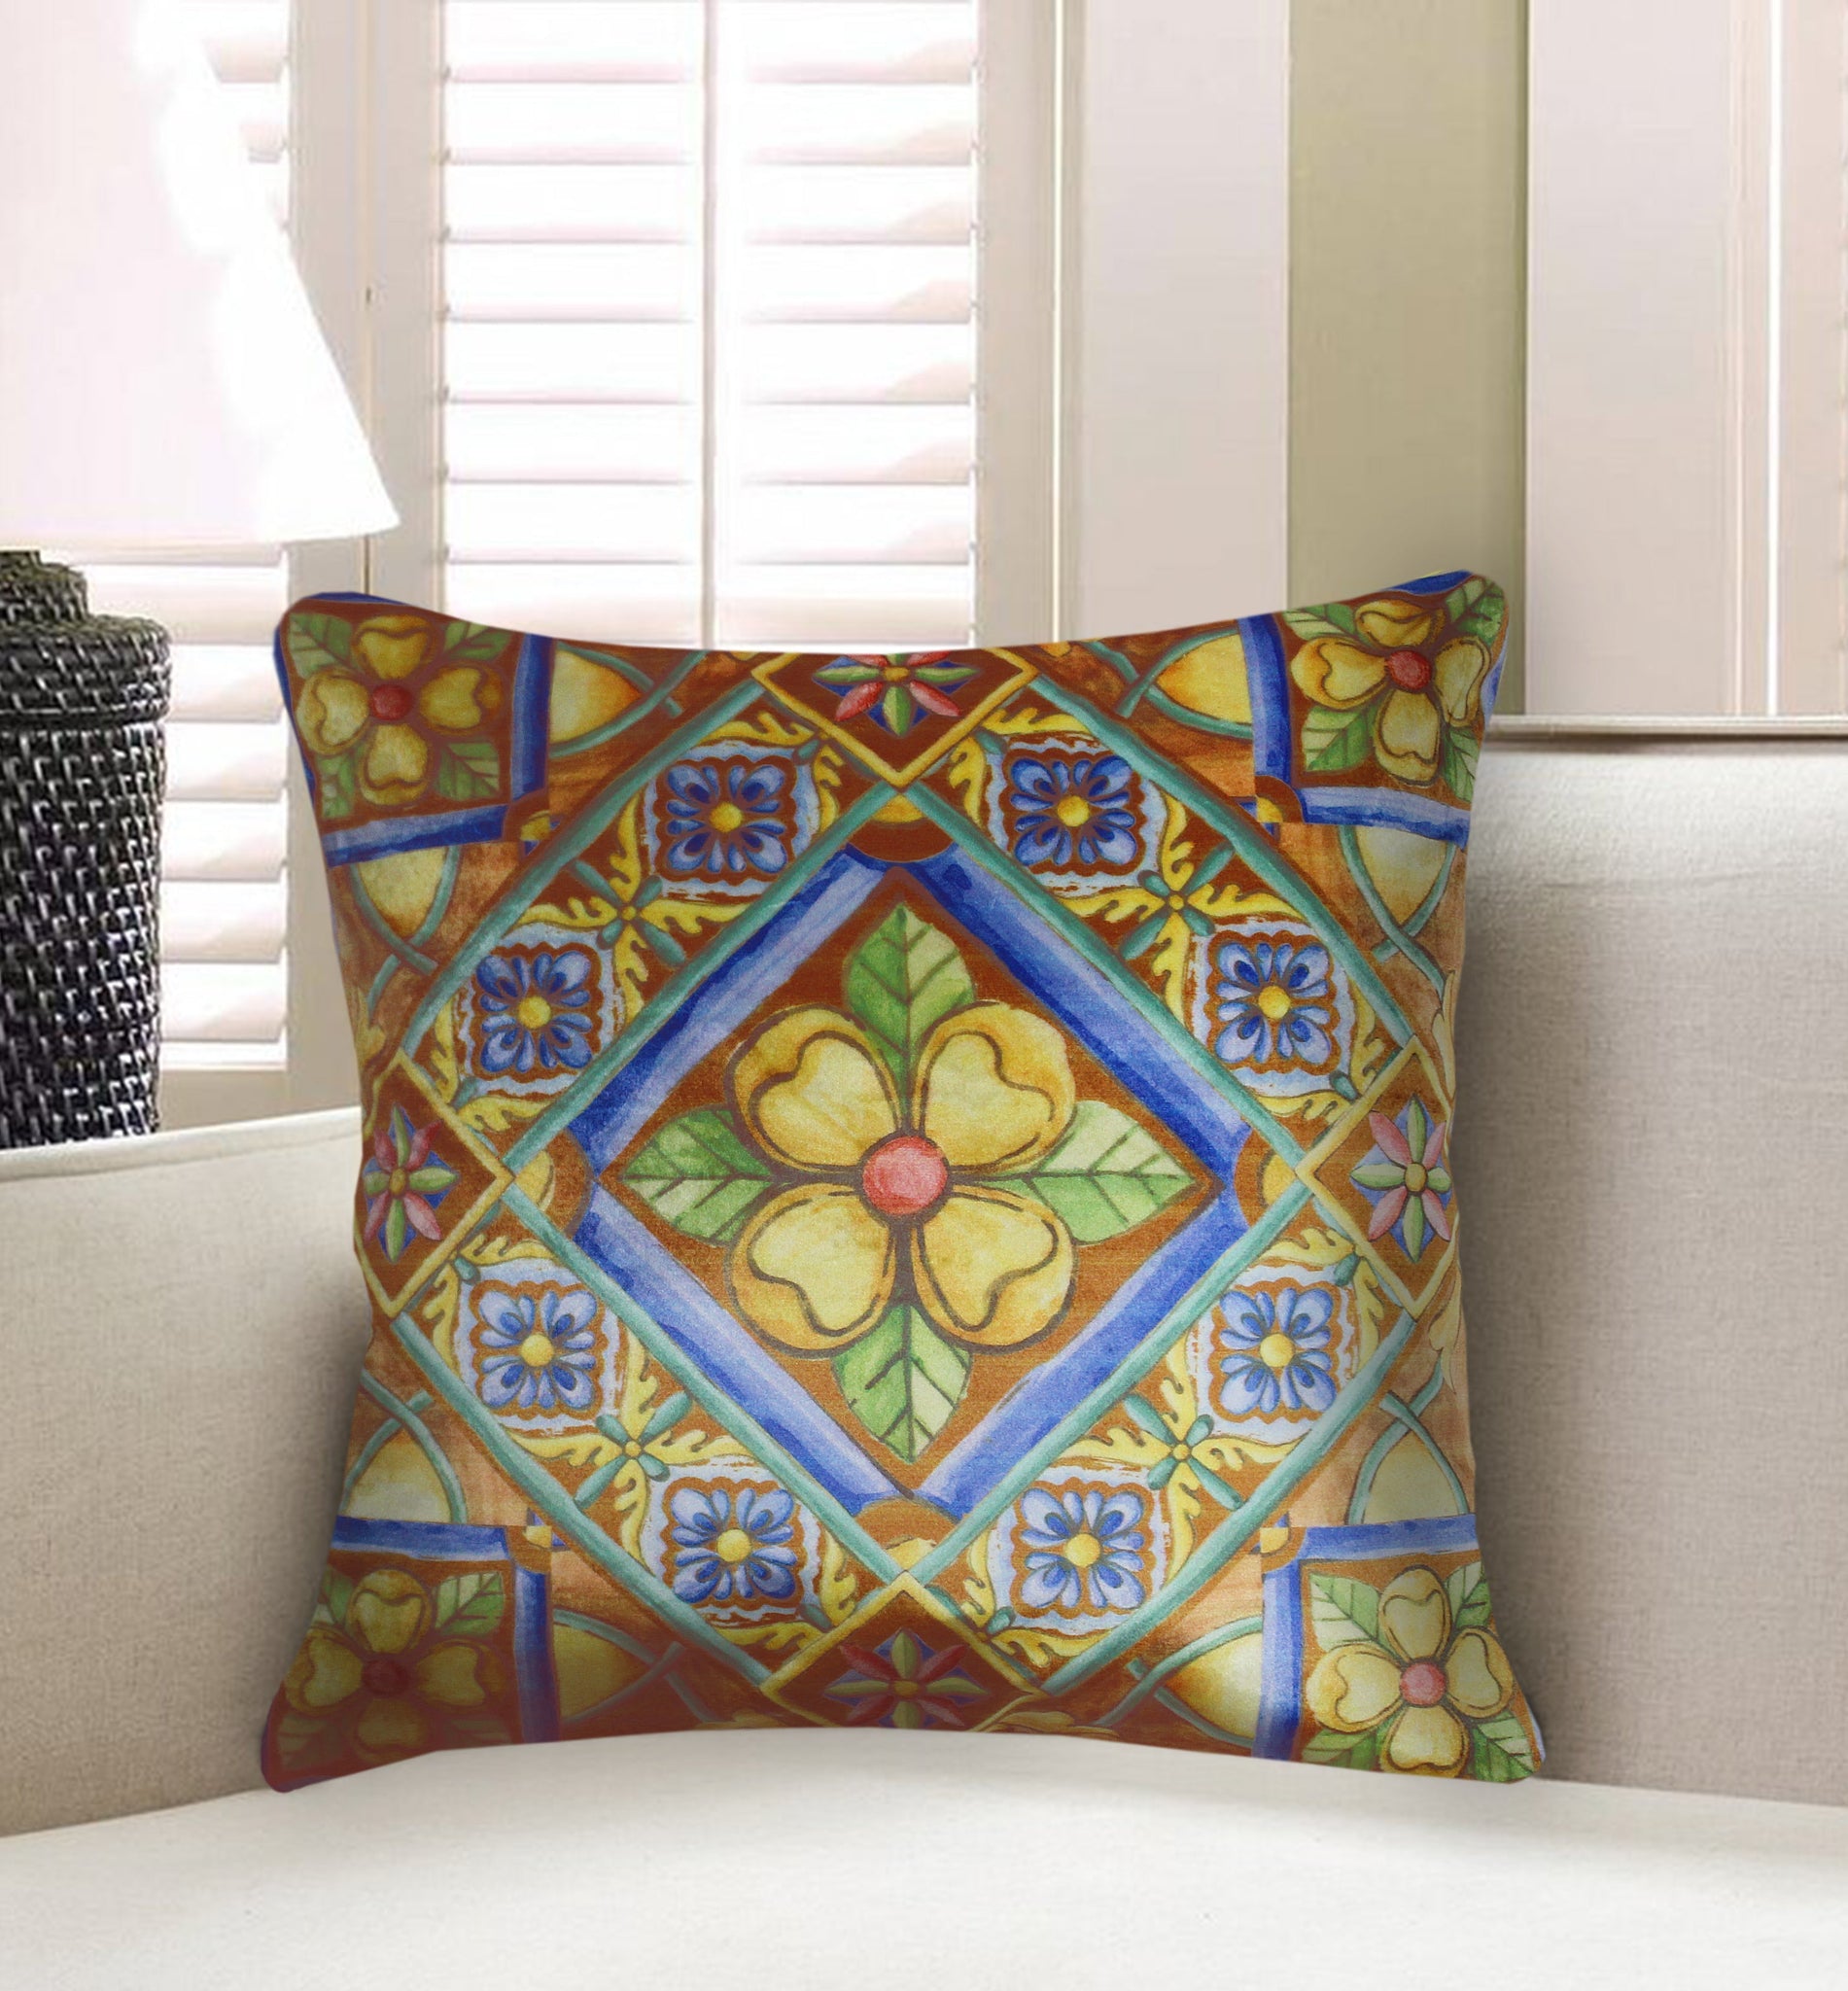 Velvet Cushion Cover Baroque Ceramic Tile Art Decorative Pillow Cover Home Decor Throw Pillow for Sofa Chair Bedroom 45x45 cm 18x18 In